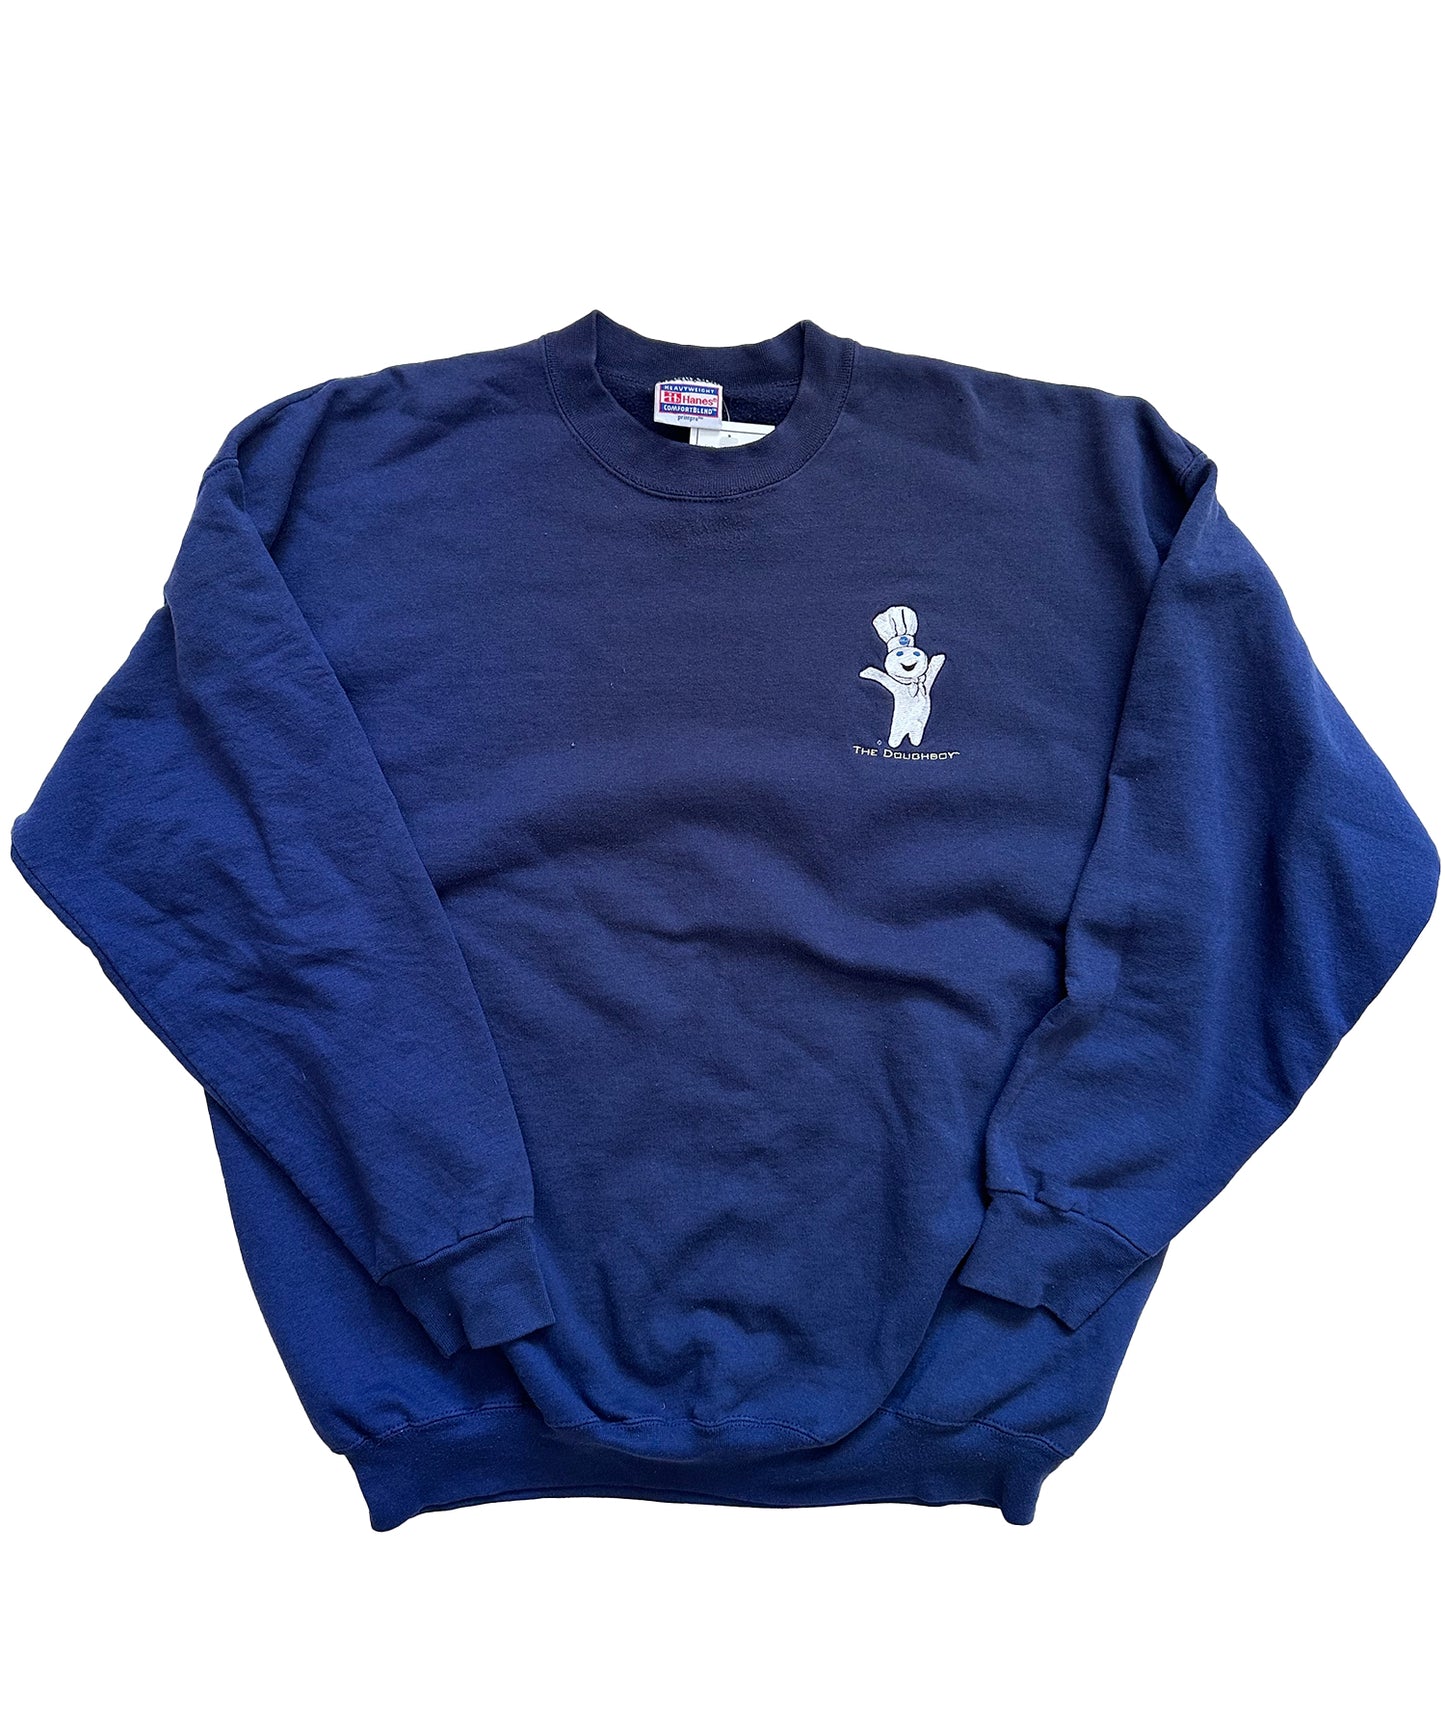 The Doughboy Crewneck Sweater (XL)